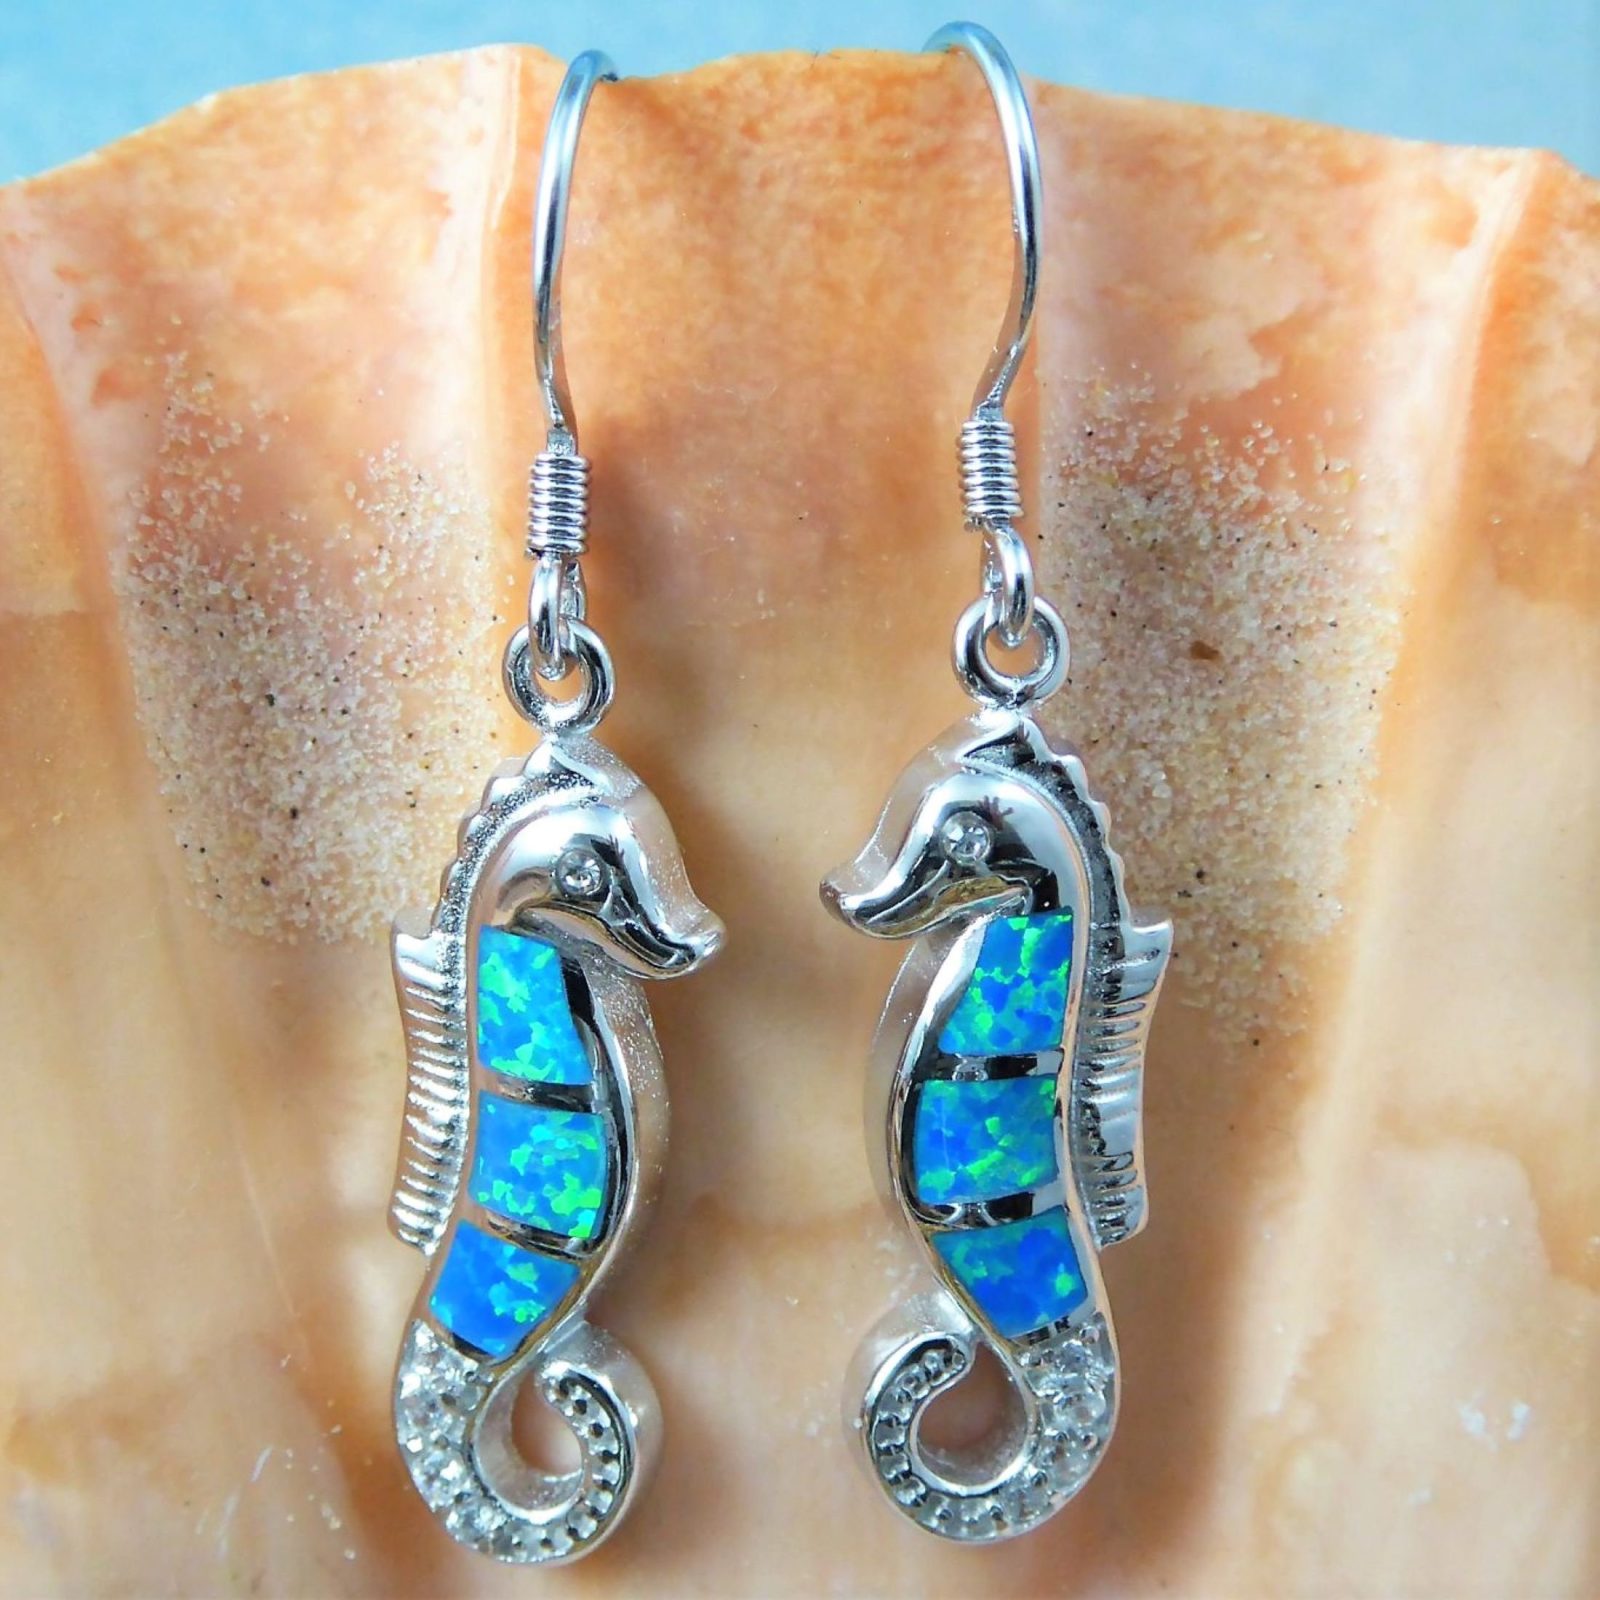 Lovely Blue Opal Inlay Sea Horse Dangle Earrings Small Blue Inlay Earrings Sterling Silver Earring Dainty Blue Opal Sea Horse Jewelry